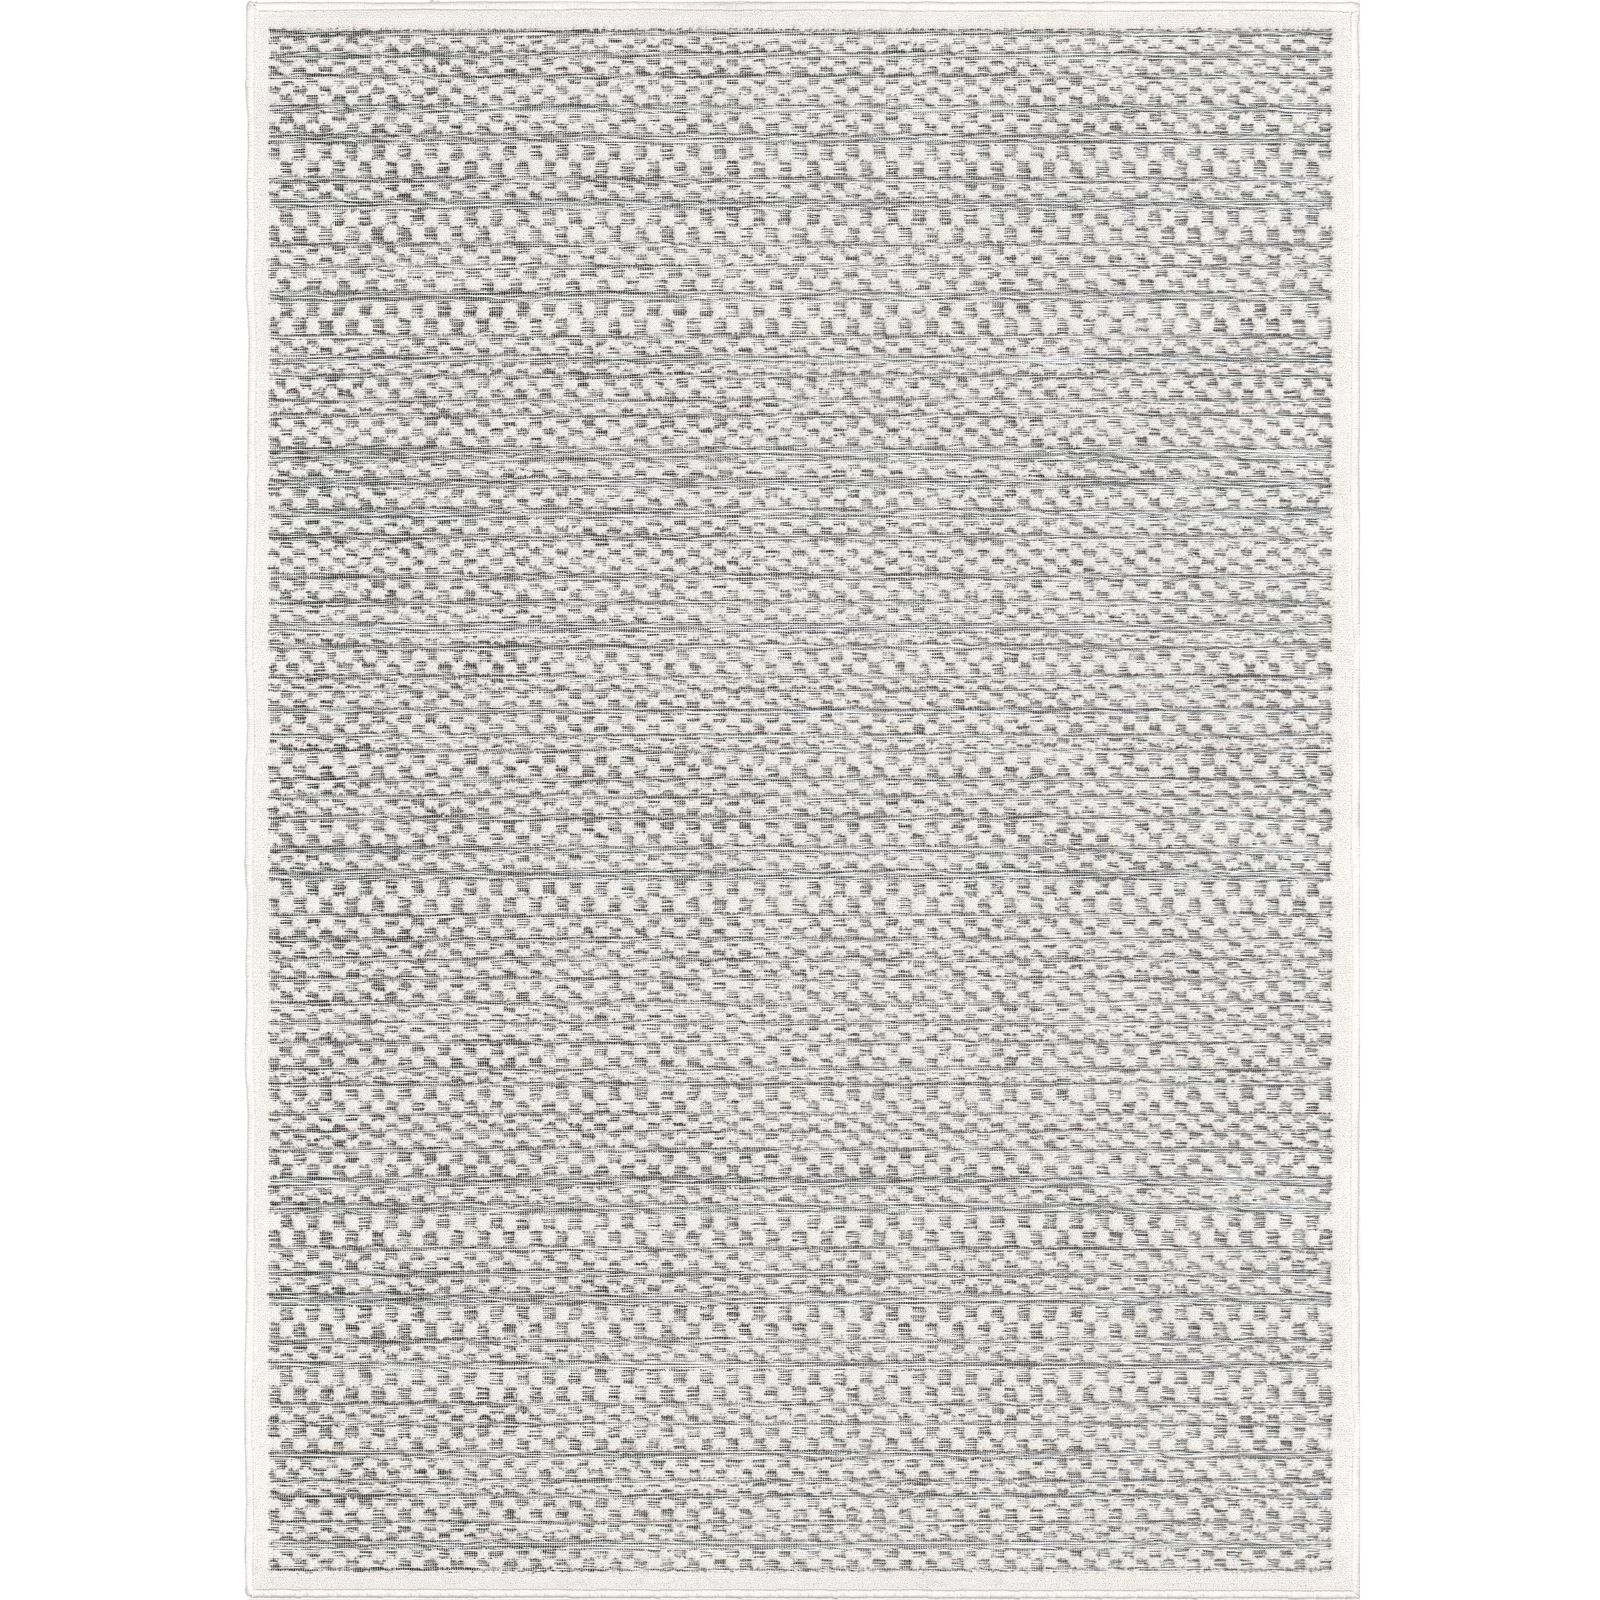 Striped Indoor / Outdoor Area Rug in White | Wayfair Professional